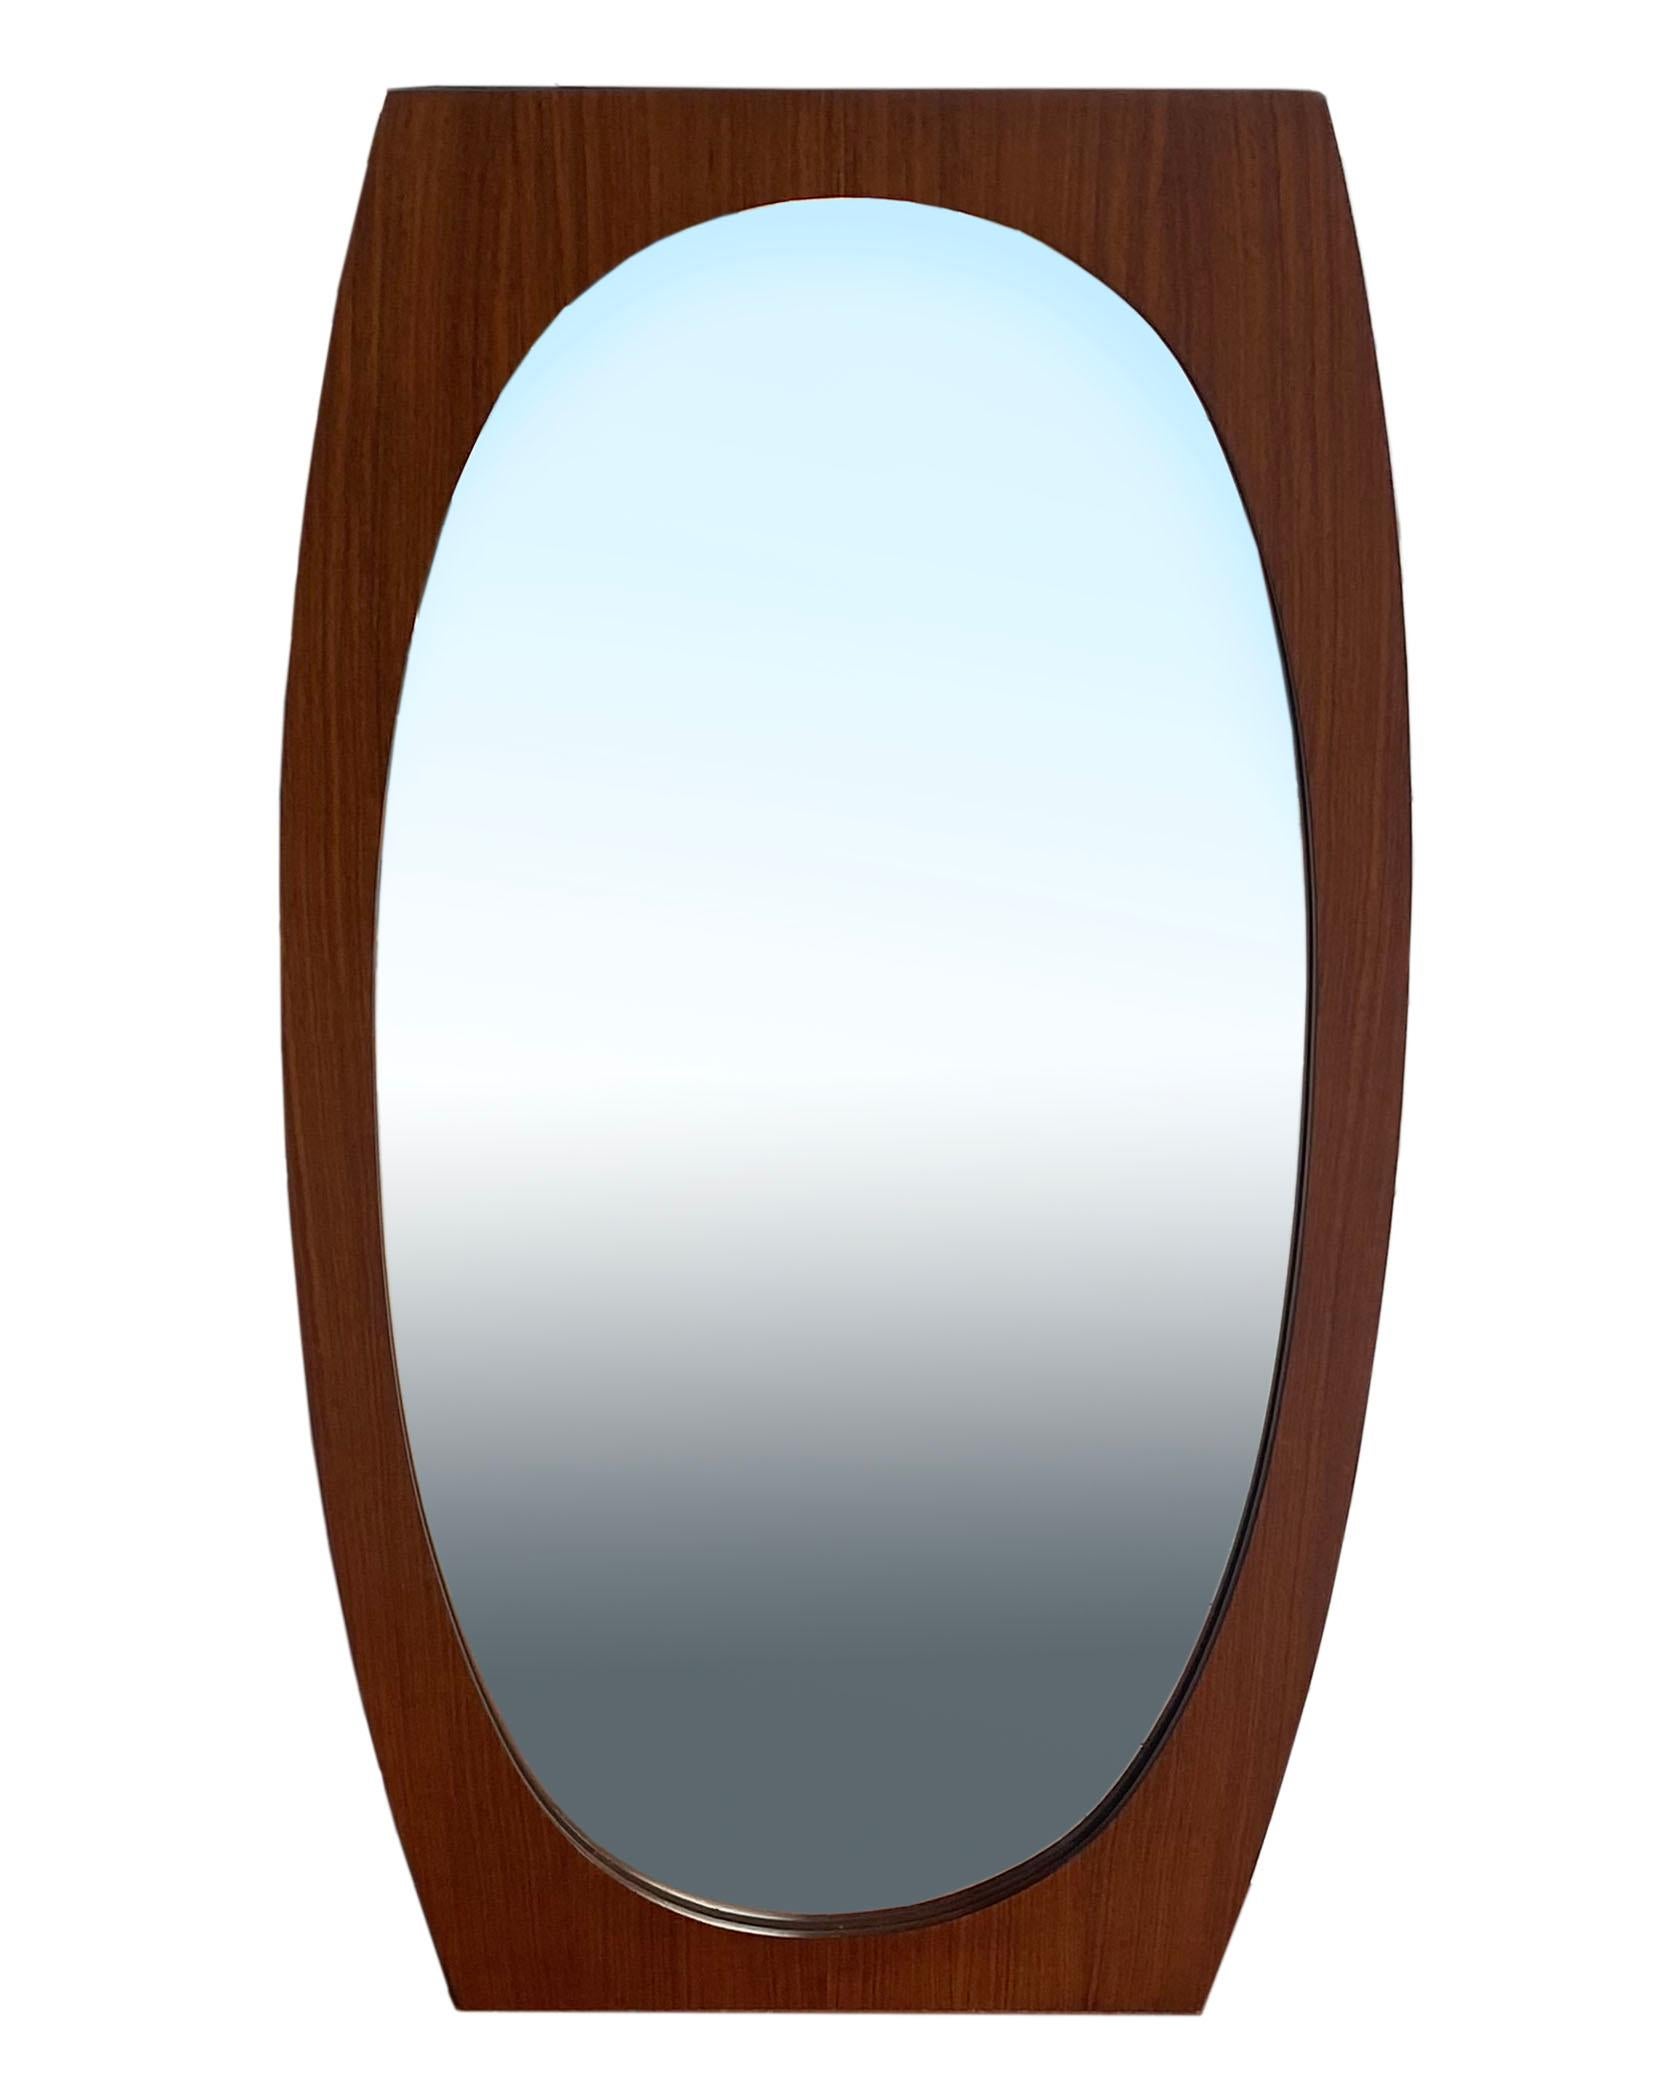 Gianfranco Frattini 
Rosewood mirror 
Circa 1970
Dimensions : W 100 x L 58cm x 2,5cm 
Price: 1900€ (€).